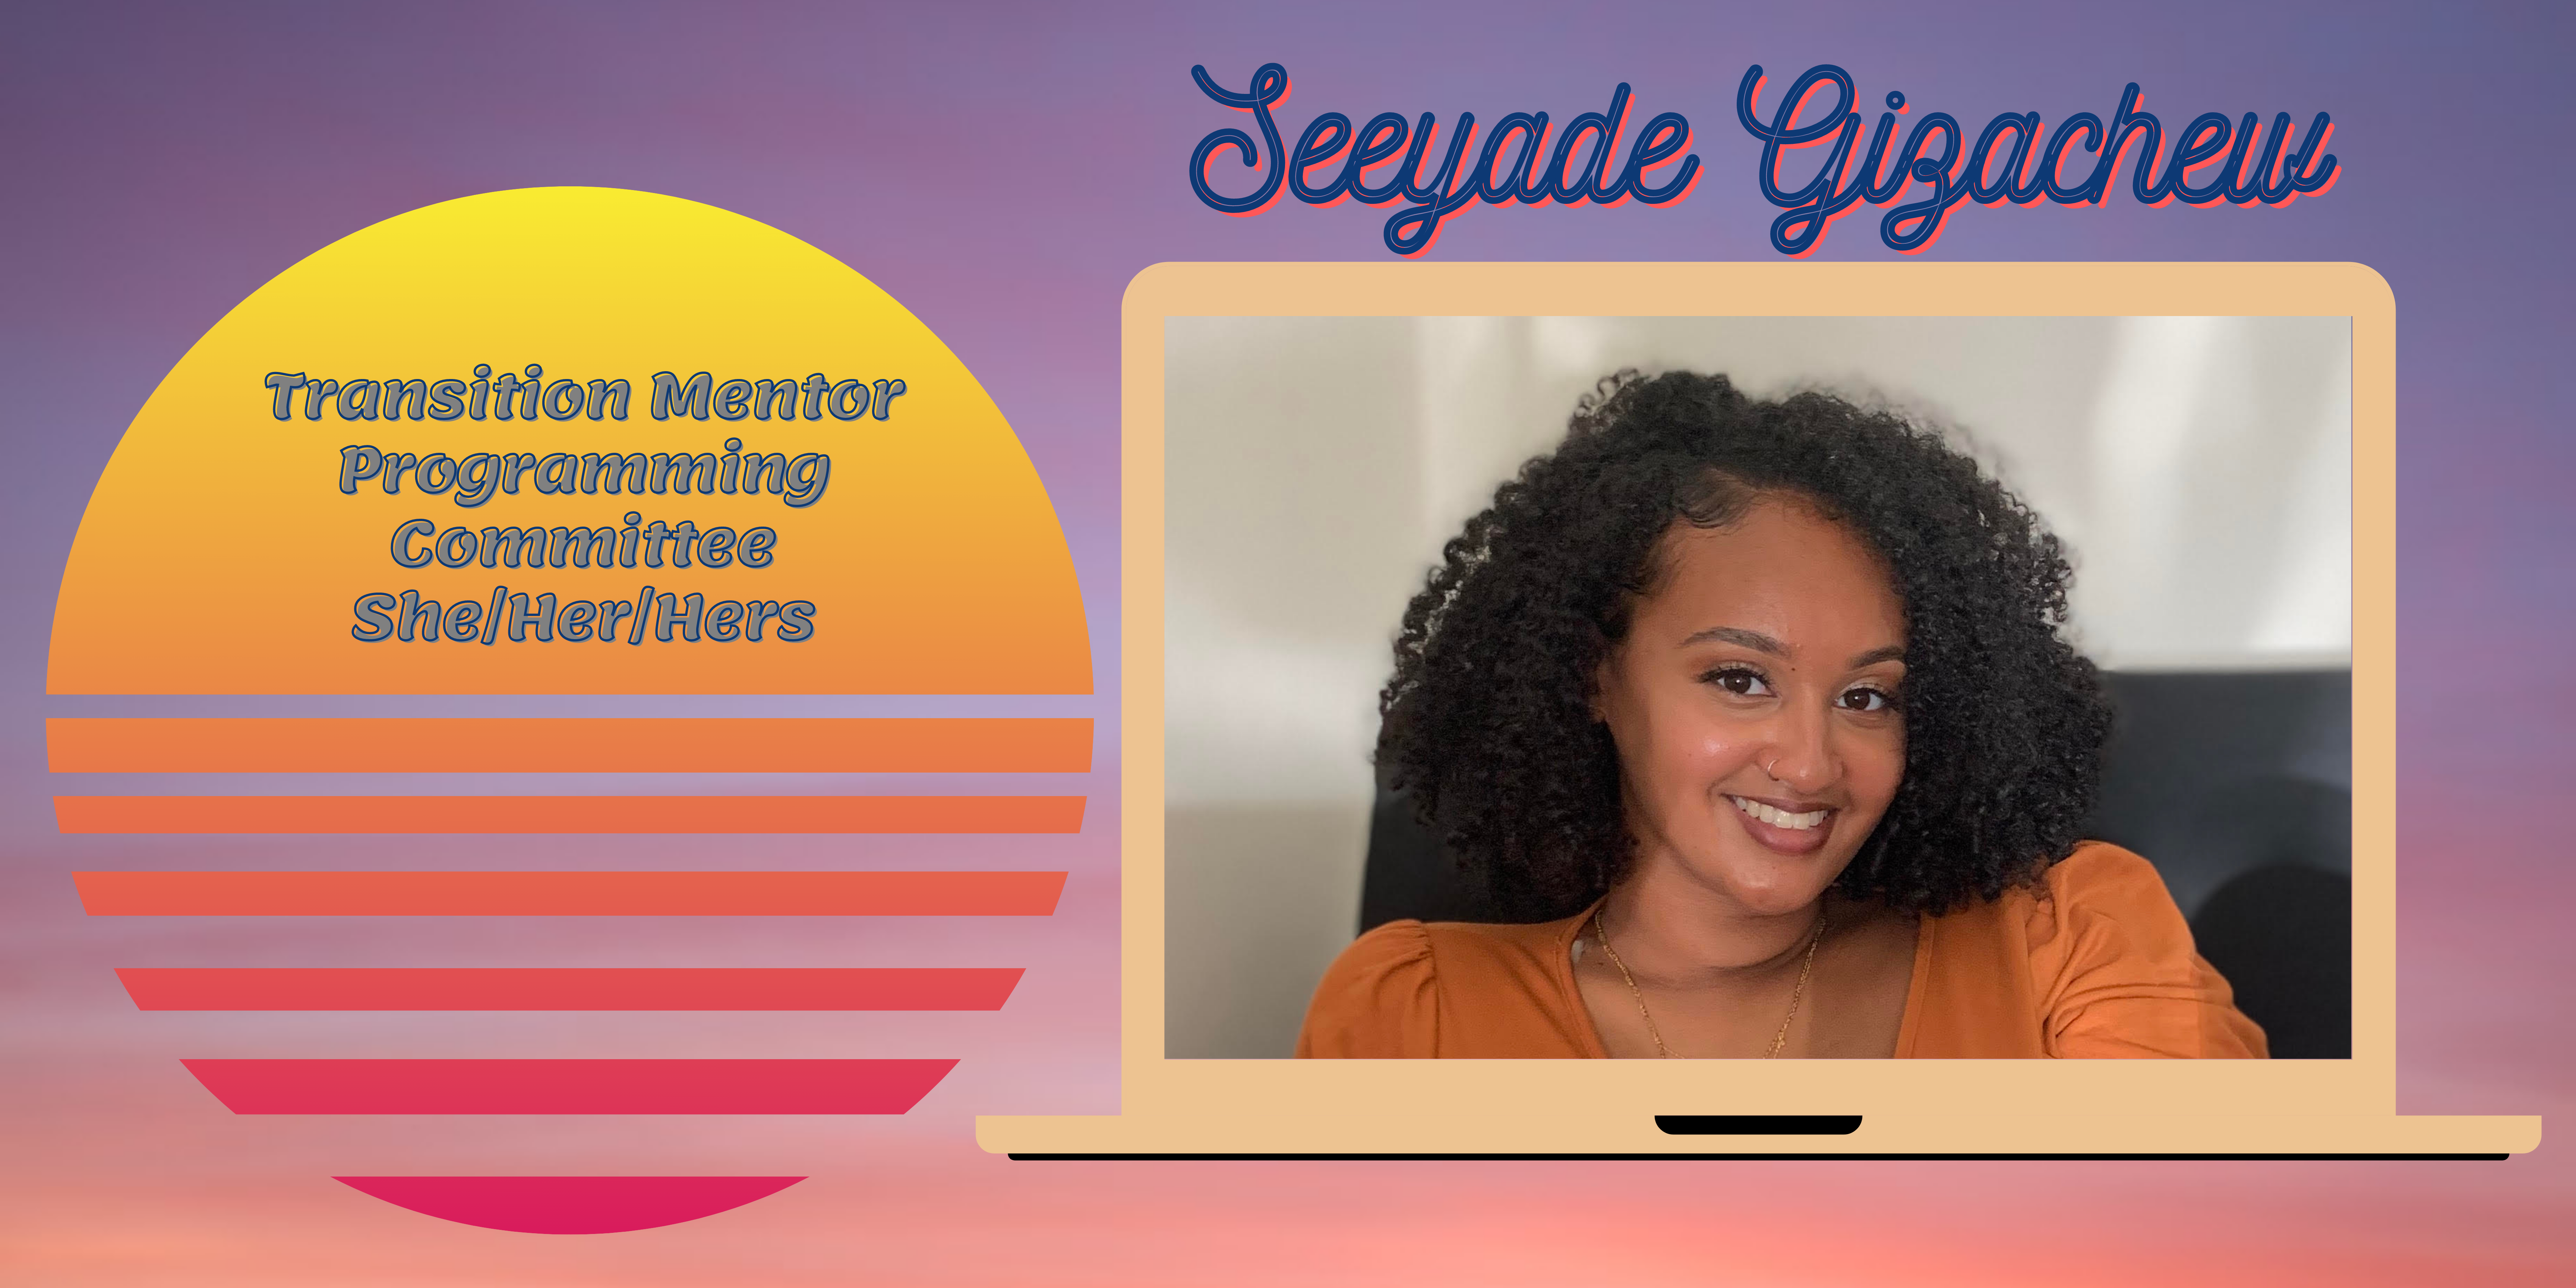 Transition Mentor: Seeyade Gizachew, pronouns she/her/hers, Programming Committee